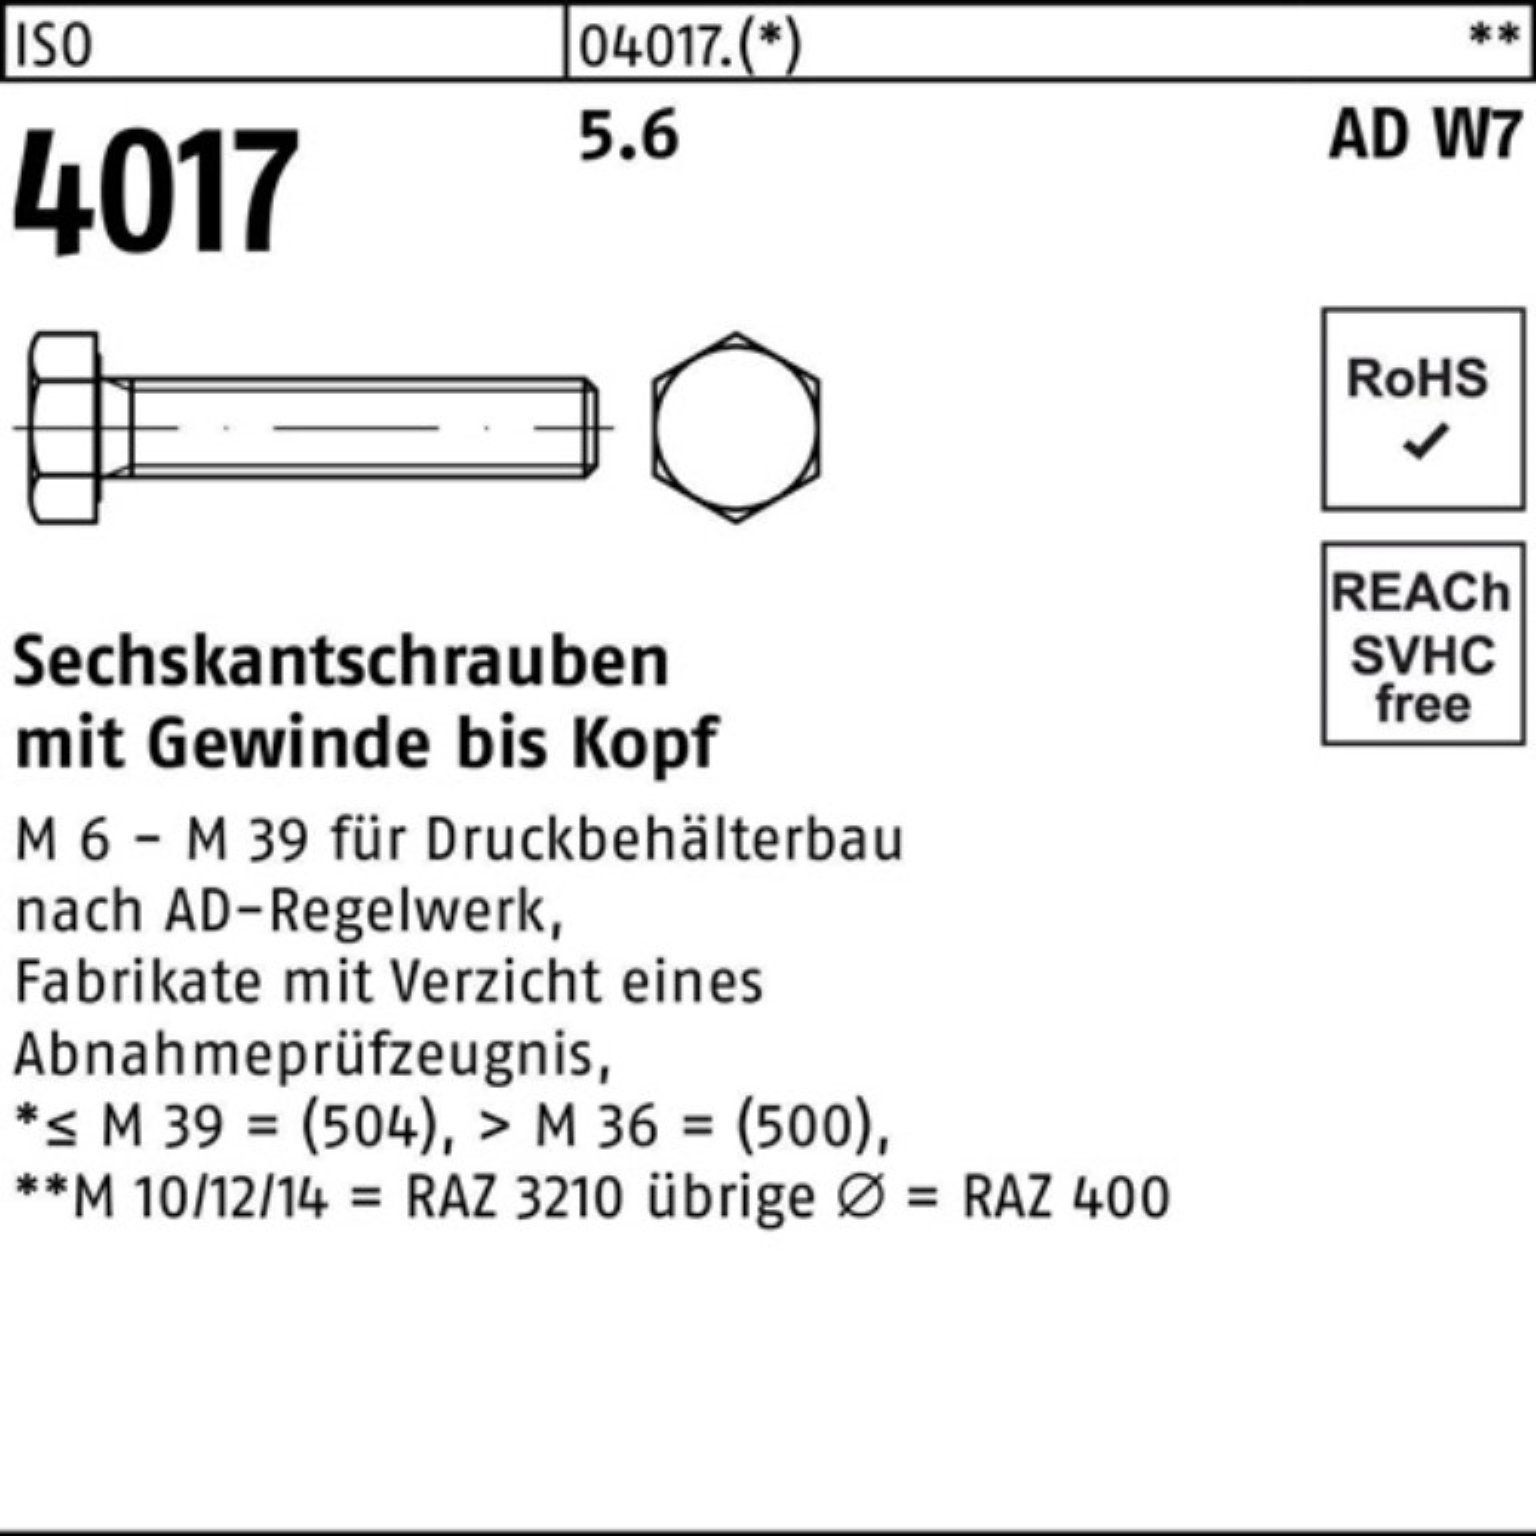 Bufab Sechskantschraube 5.6 100er 50 M16x Sechskantschraube I ISO 35 VG Stück W7 Pack AD 4017